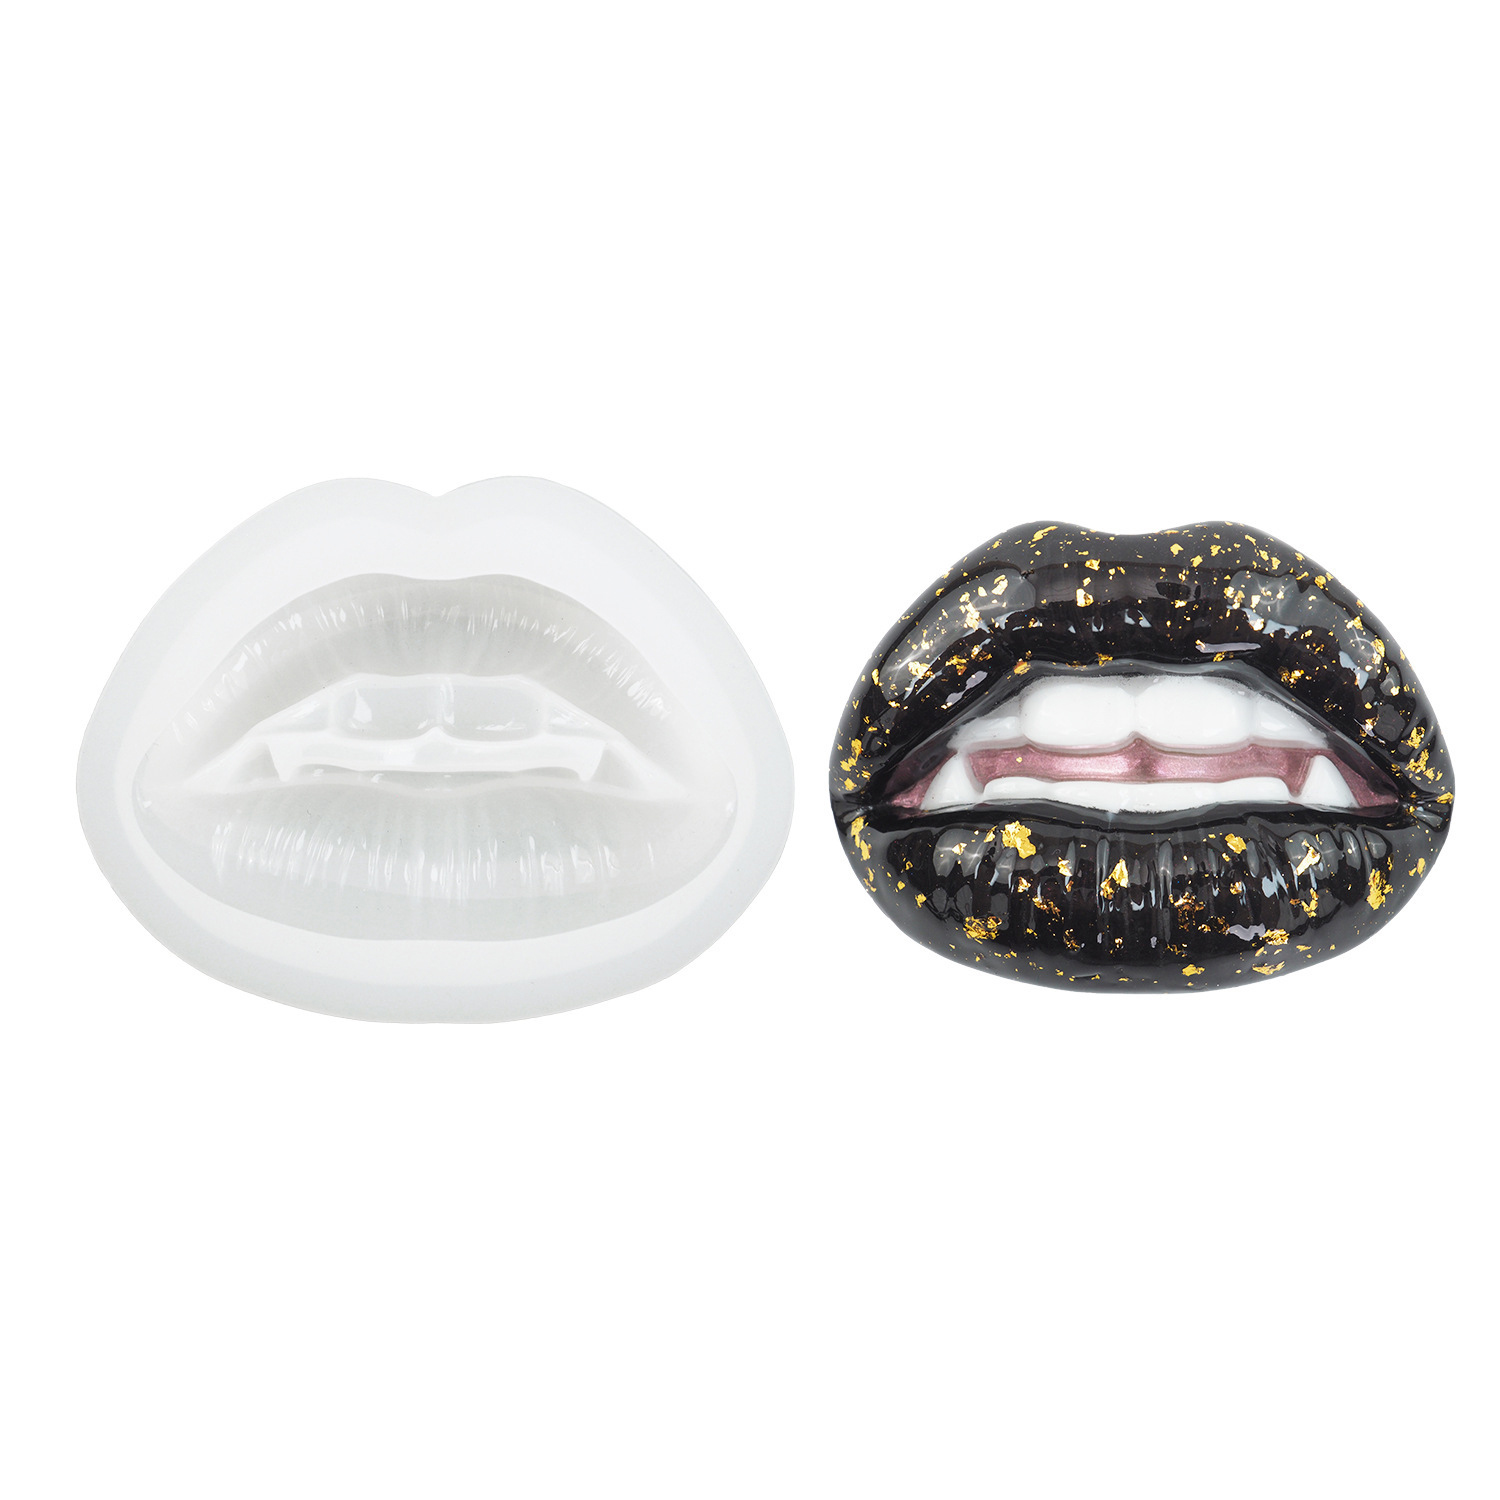 Voyyphixa 3PCS 3D Lips Shape Molds for Epoxy Resin, Mouth Resin